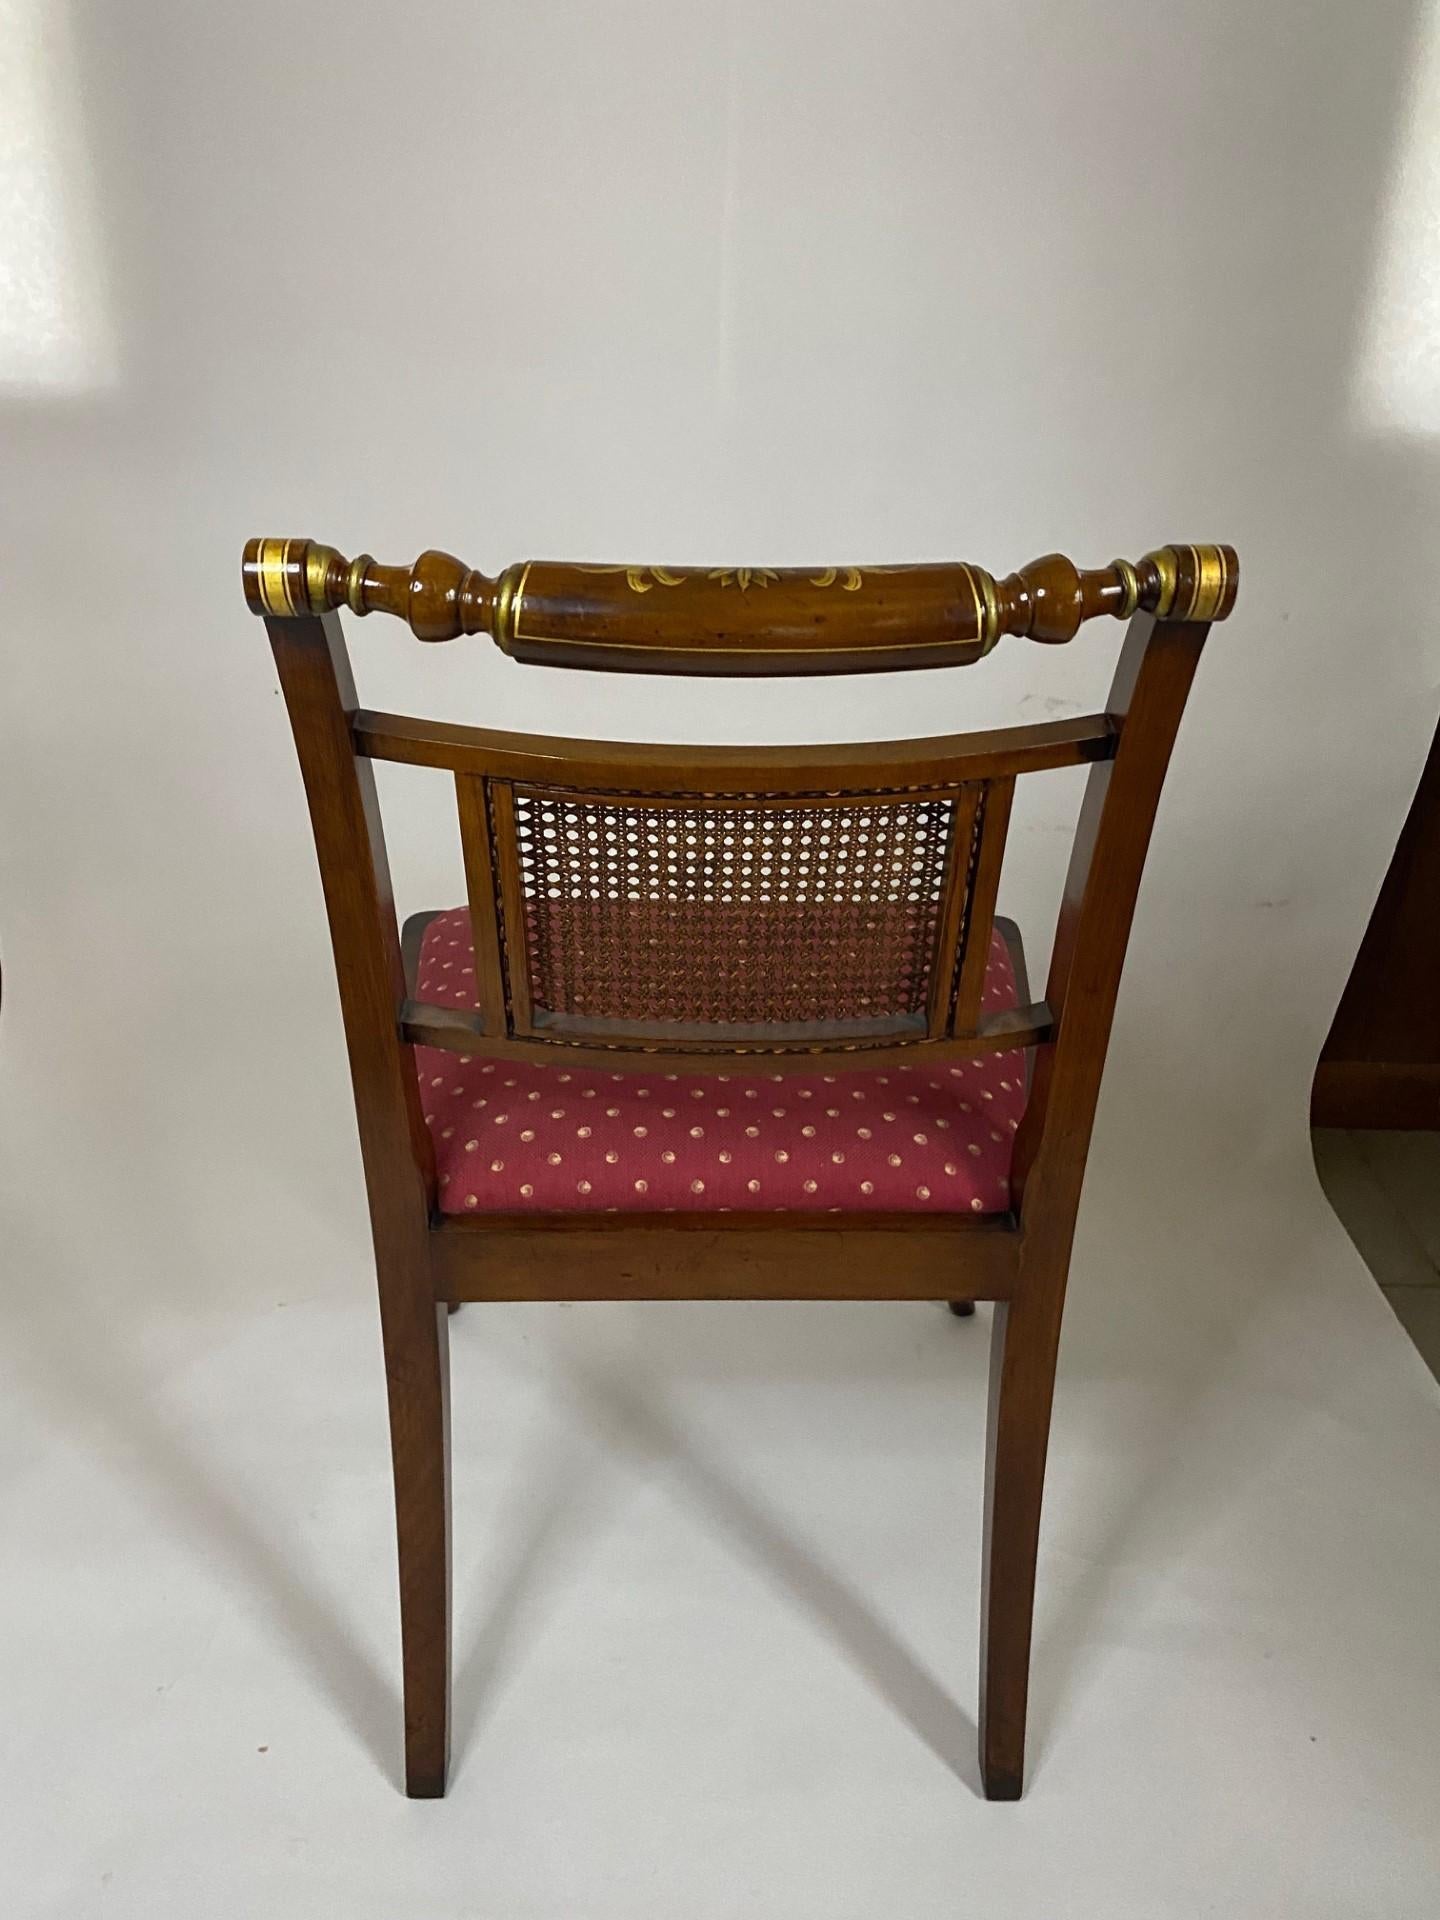 NEU, englischer Beistellstuhl aus Rosenholz im Regency-Stil mit handbemalter Dekoration (Ahornholz) im Angebot